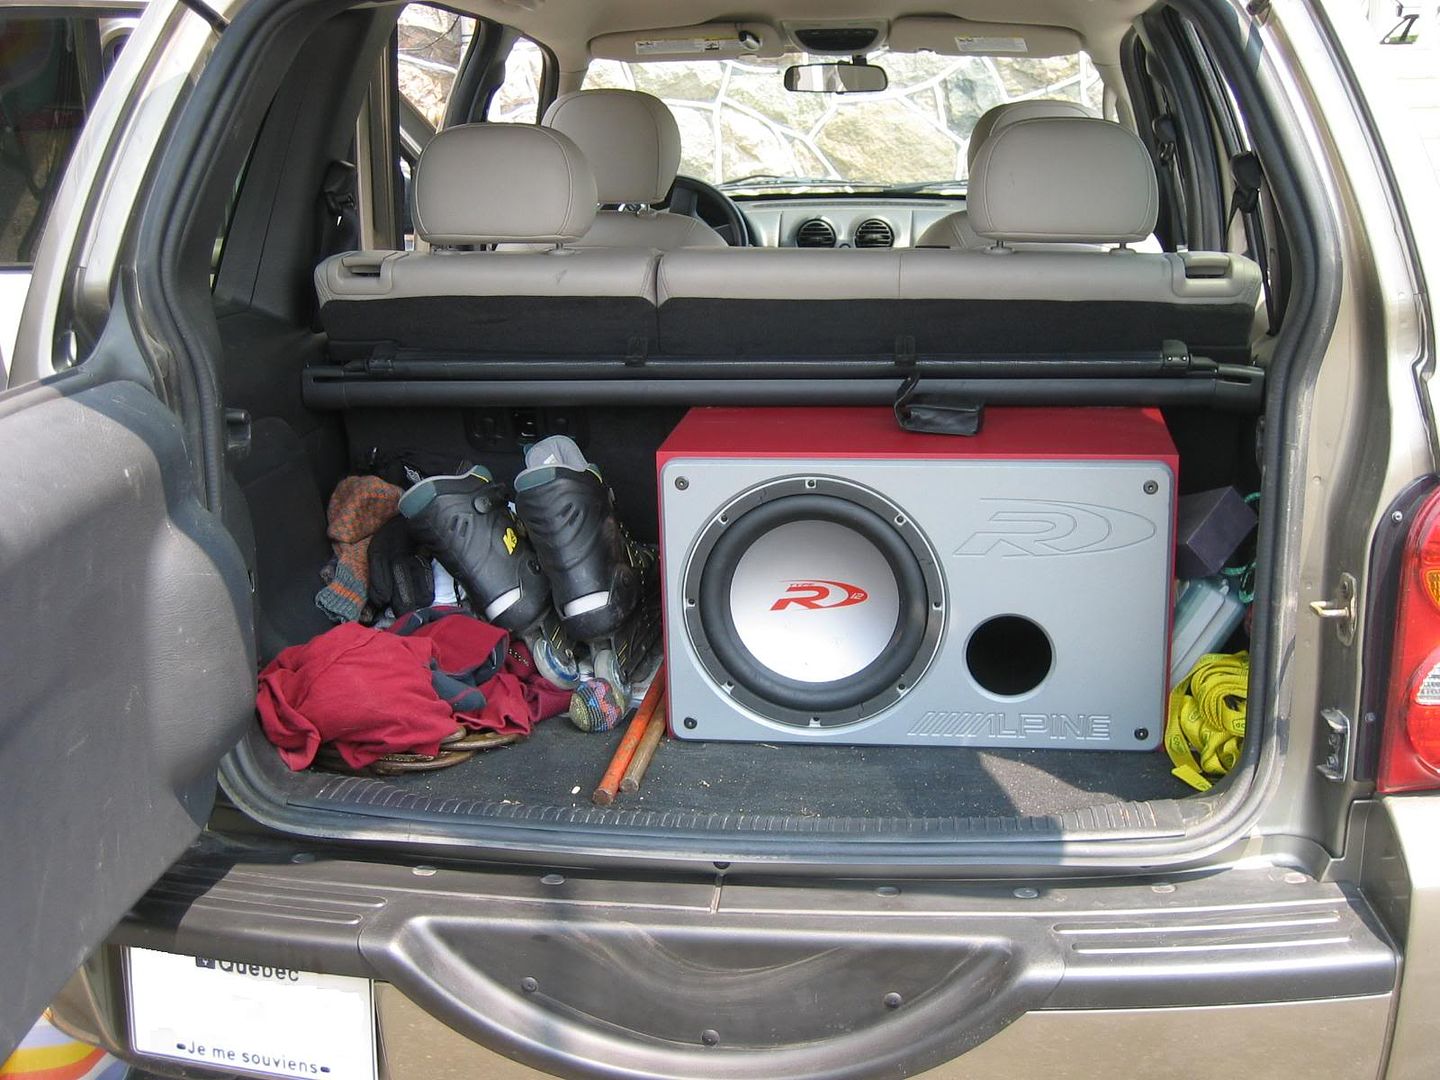 2004 Jeep liberty sound system #3